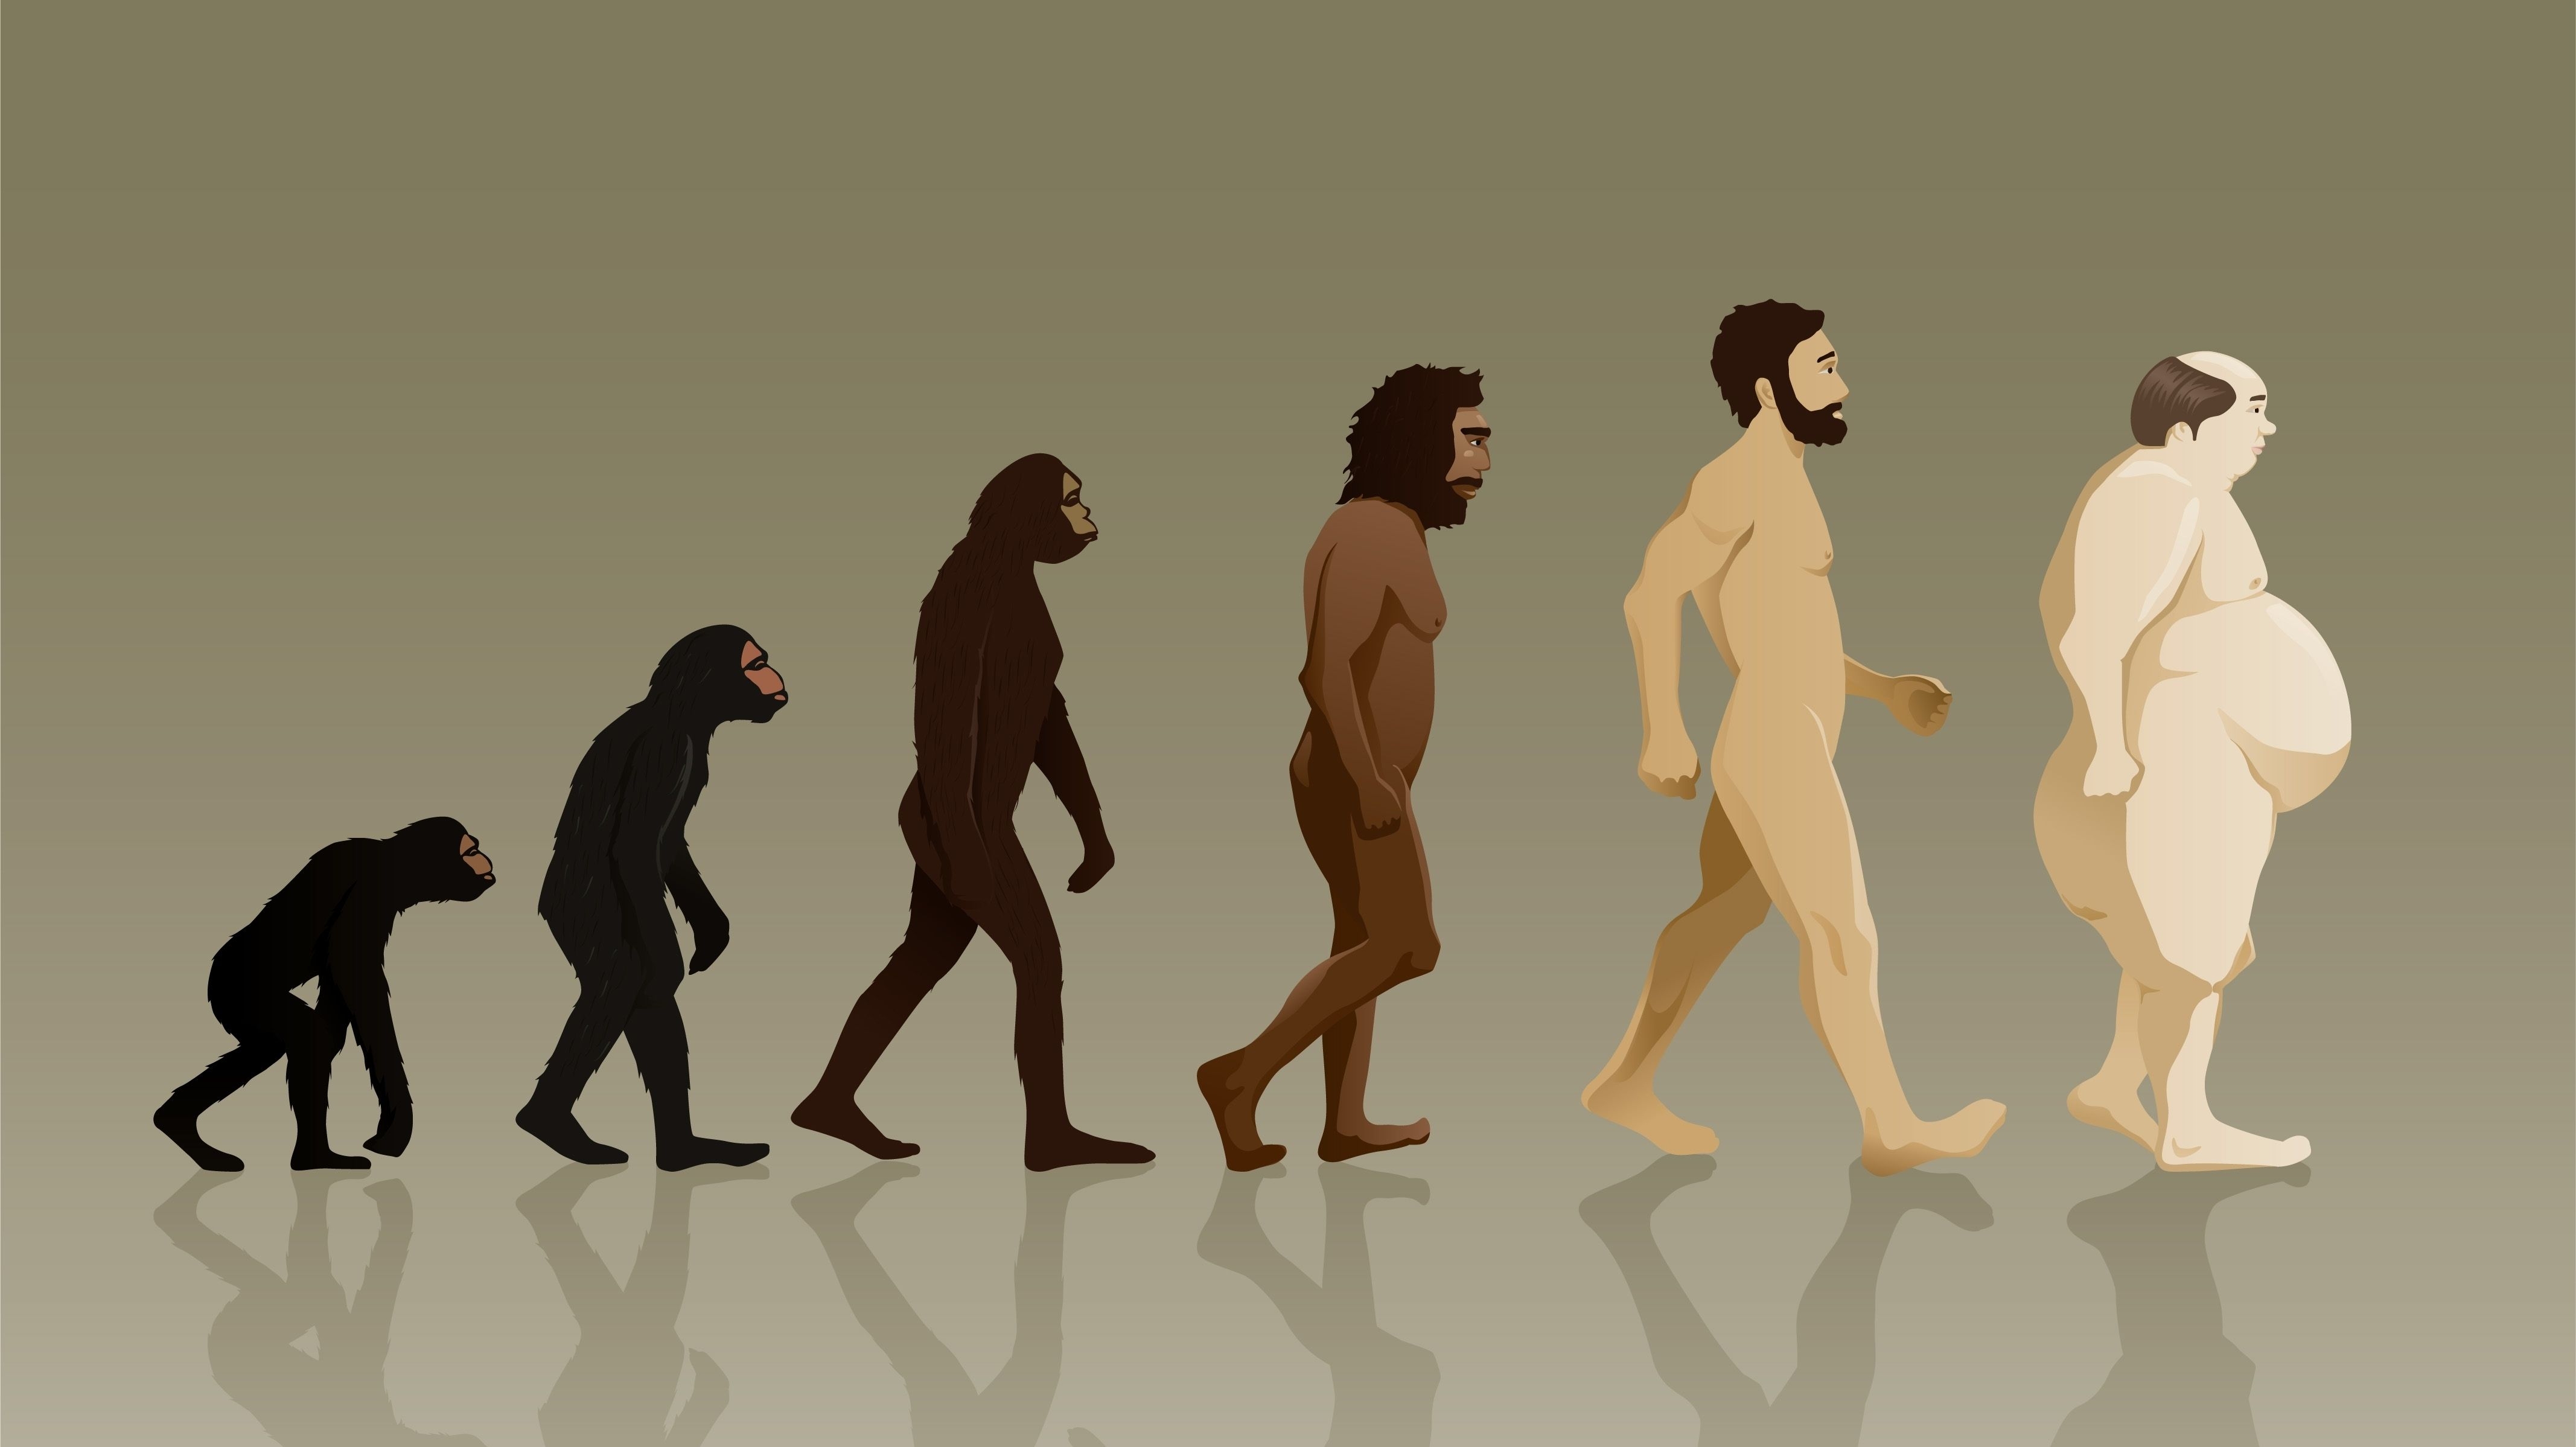 Human picture. Эволюция Дарвин хомо сапиенс. Хомо сапиенс Эволюция женщины. Этапы эволюции хомо сапиенс. Хрпмосапиенс Эволюция.